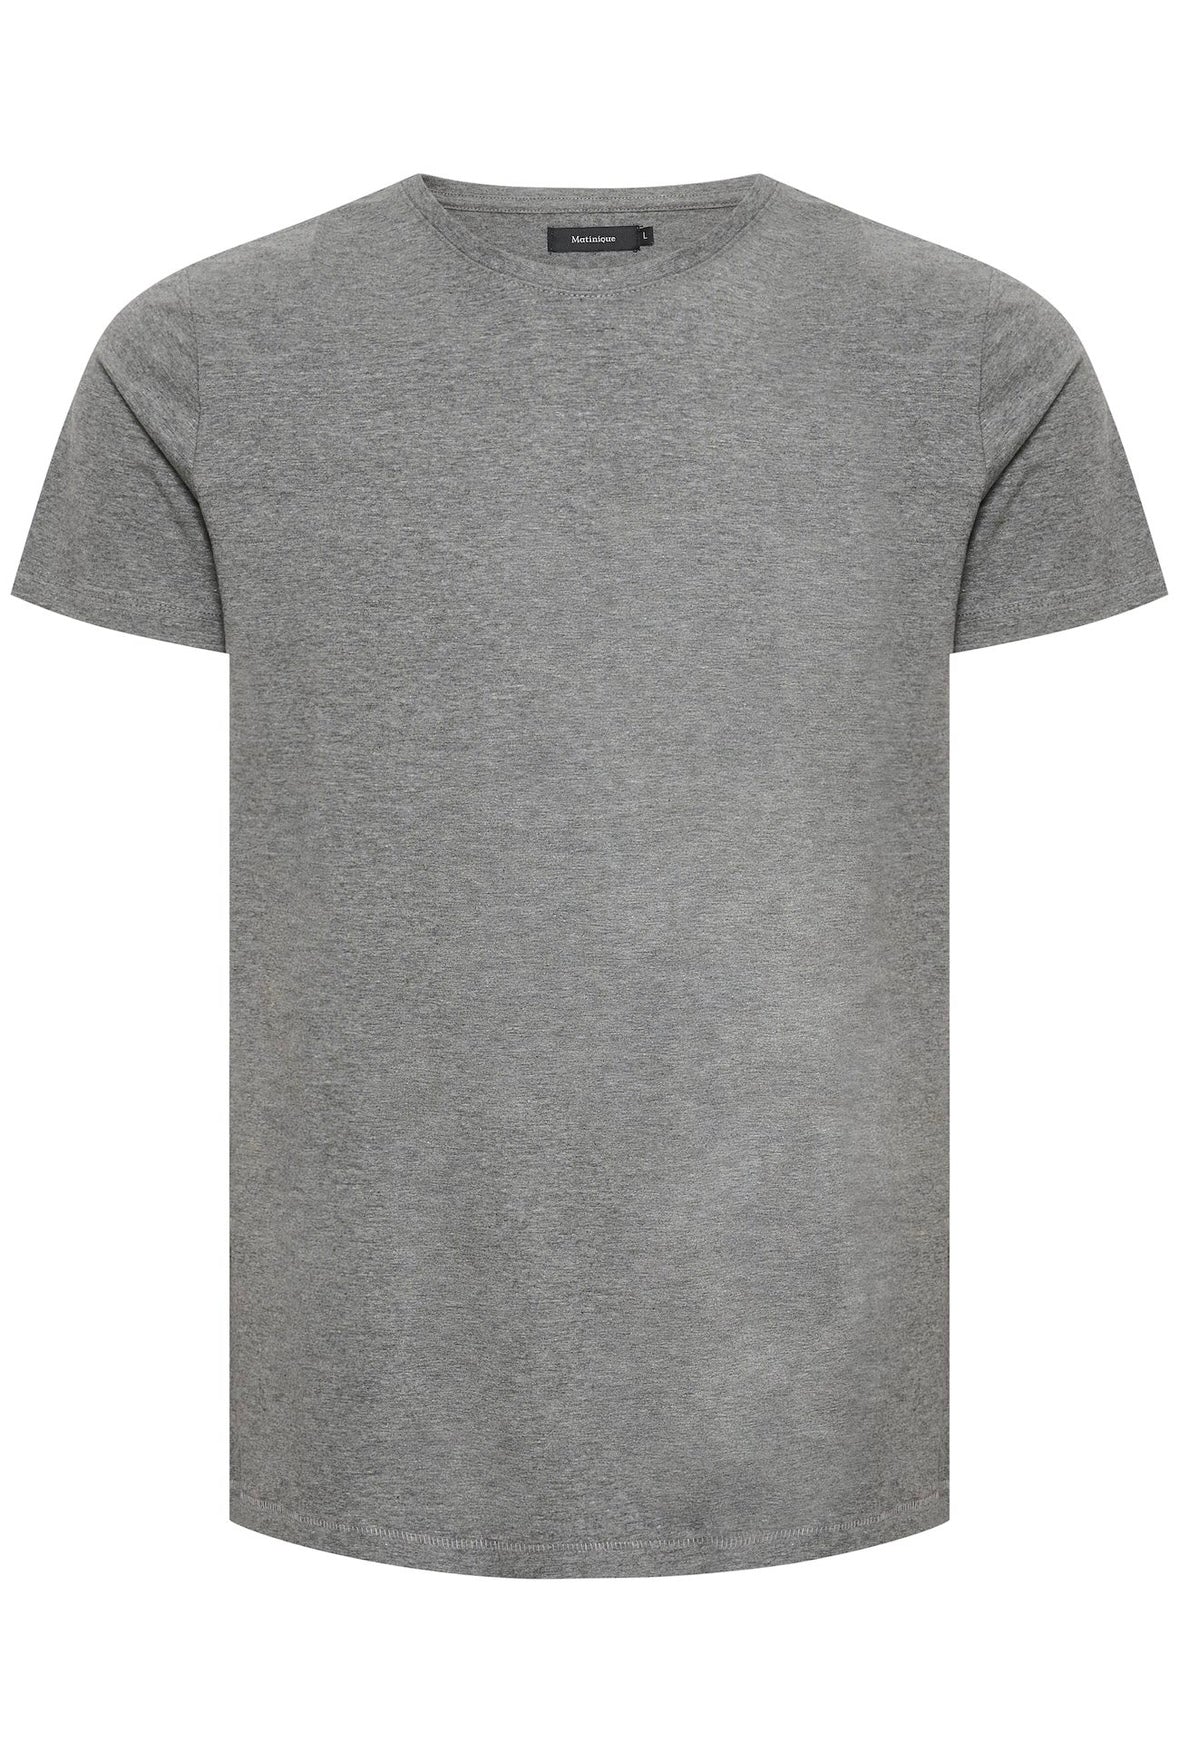 Matinique Jermalink Cotton Stretch t-shirt - Grey Melange